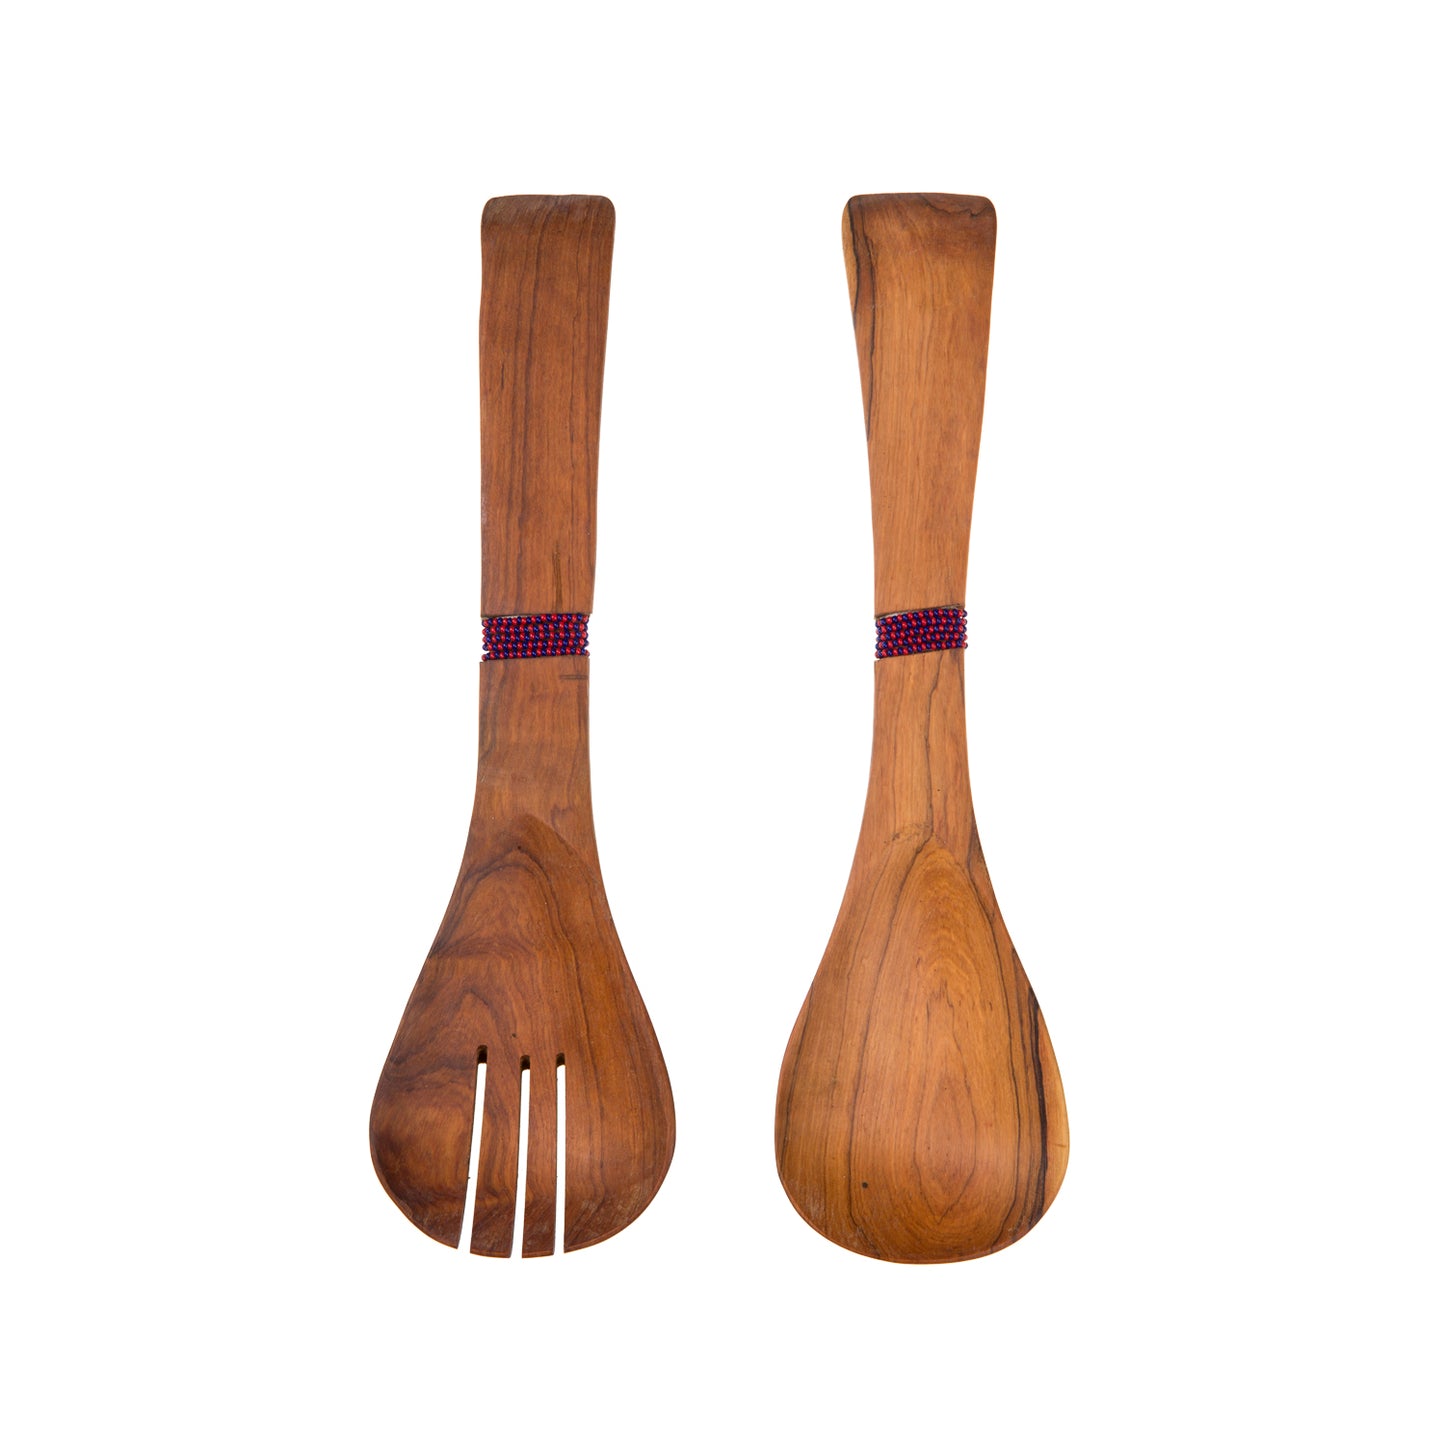 Bubinga wood serving cutlery